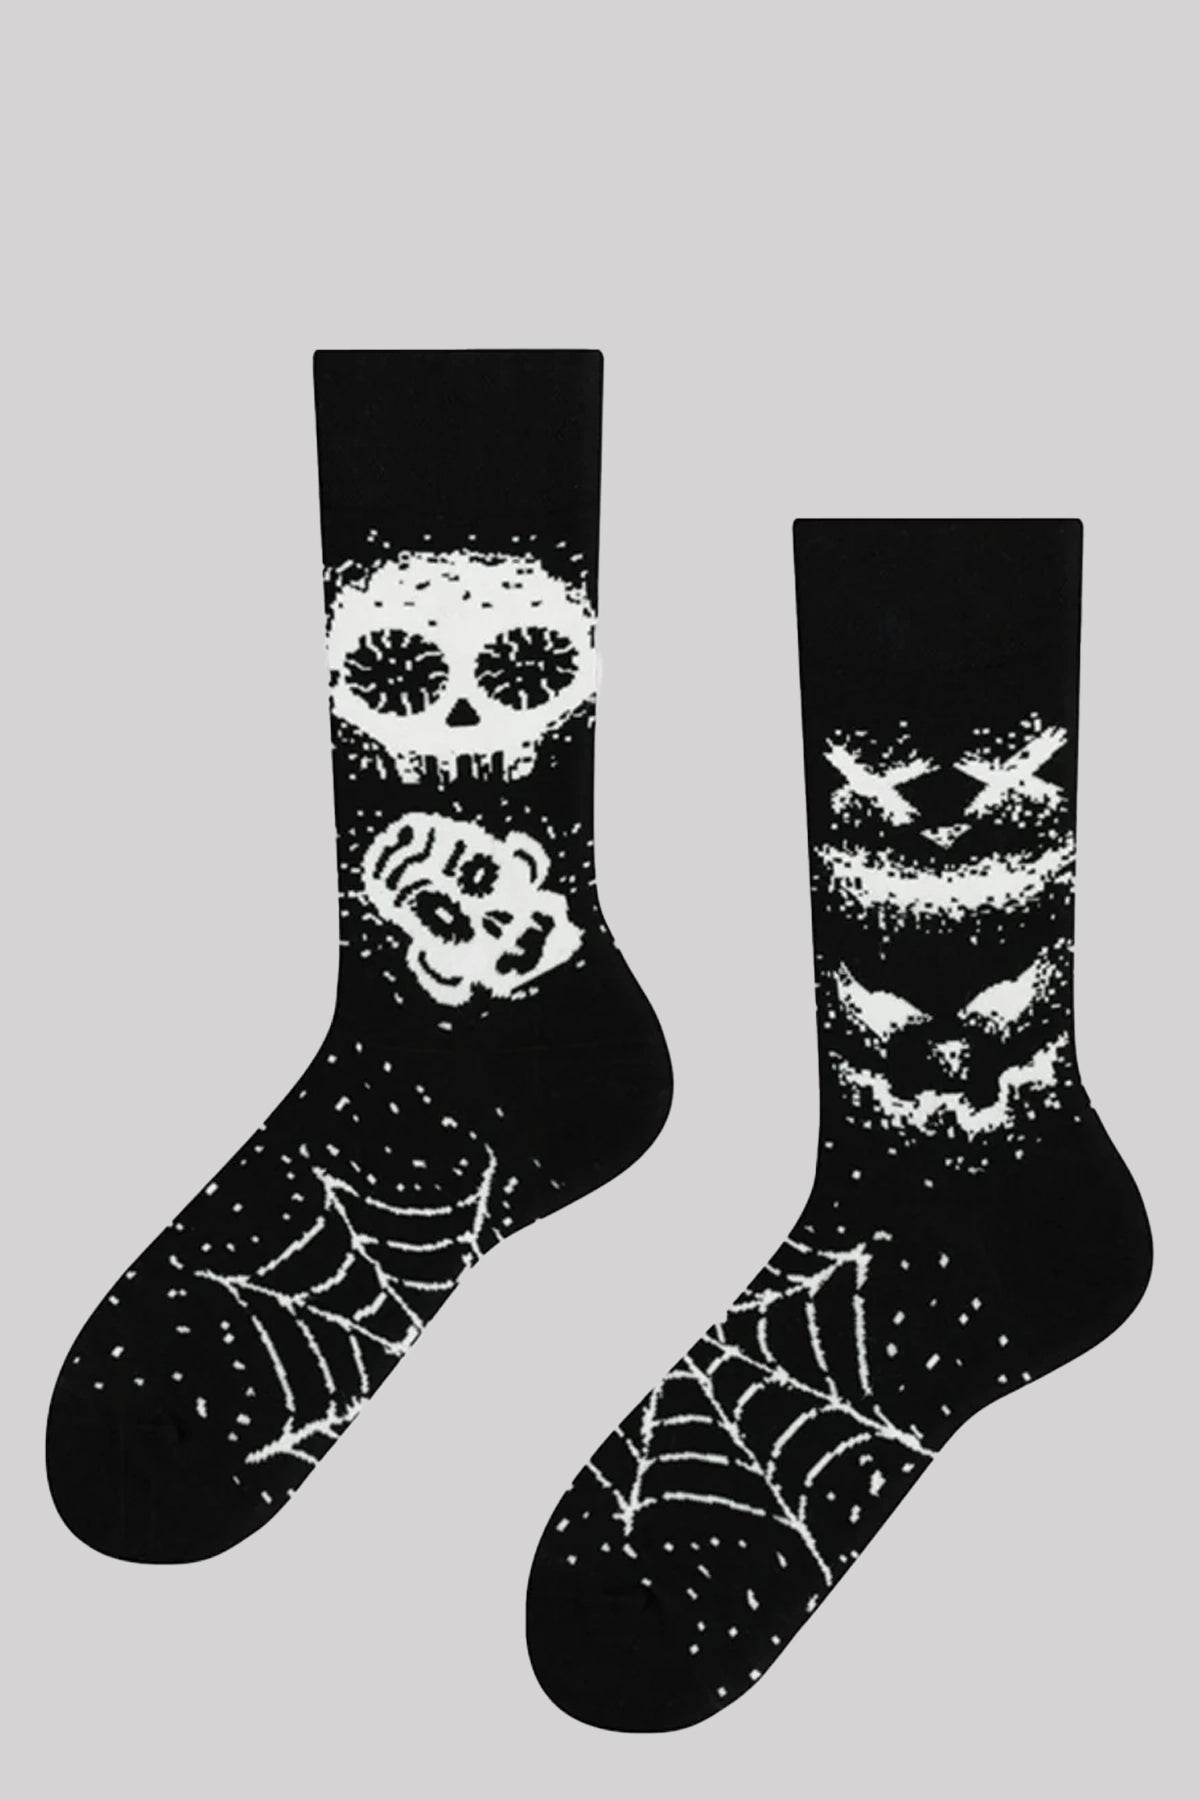 Ro Rox Horror Skull Cobweb Gothic Halloween Crew Ankle Socks